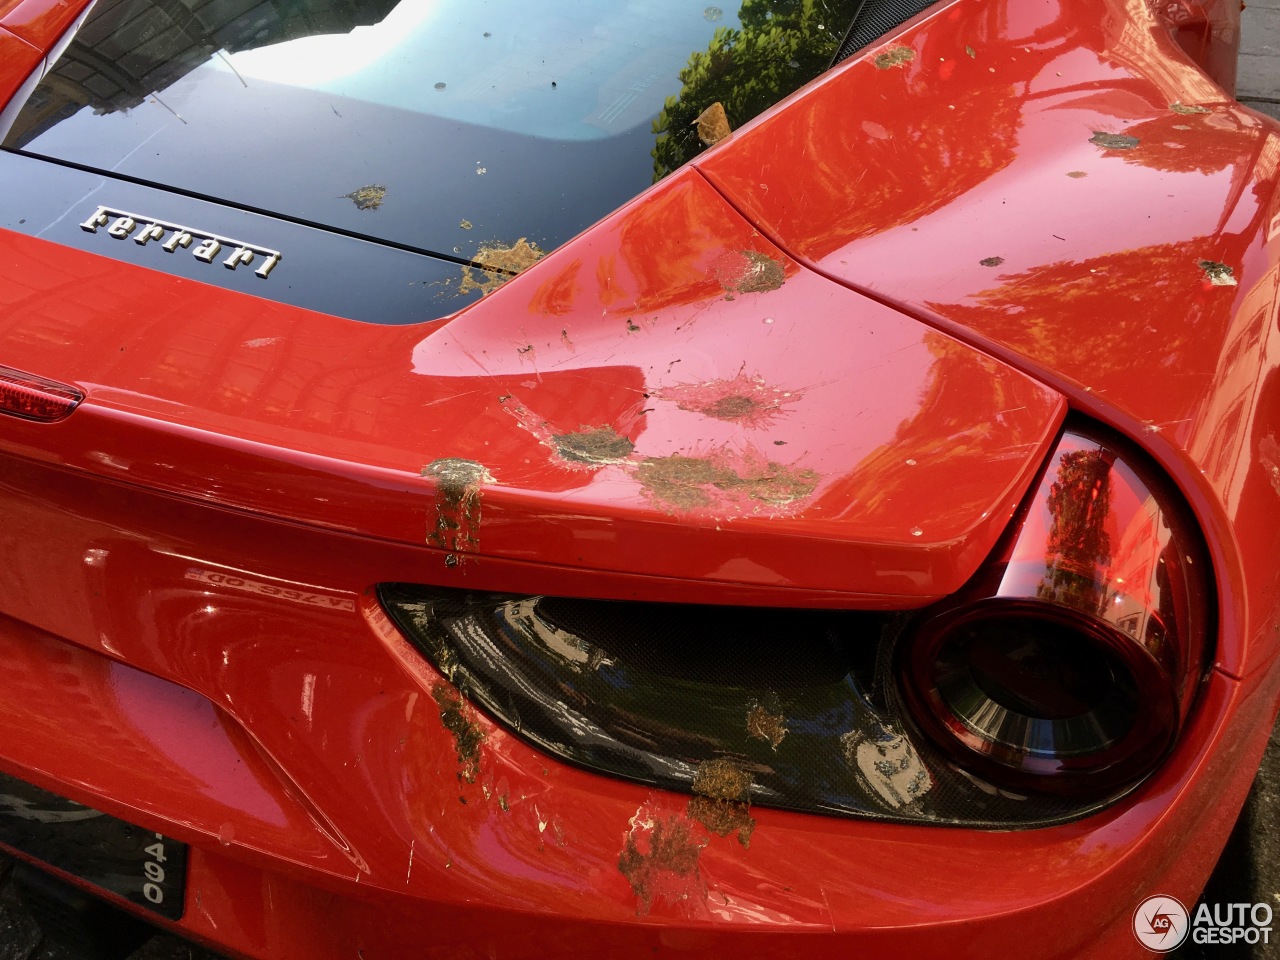 Gespot: Ondergescheten Ferrari 488 GTB in Parijs